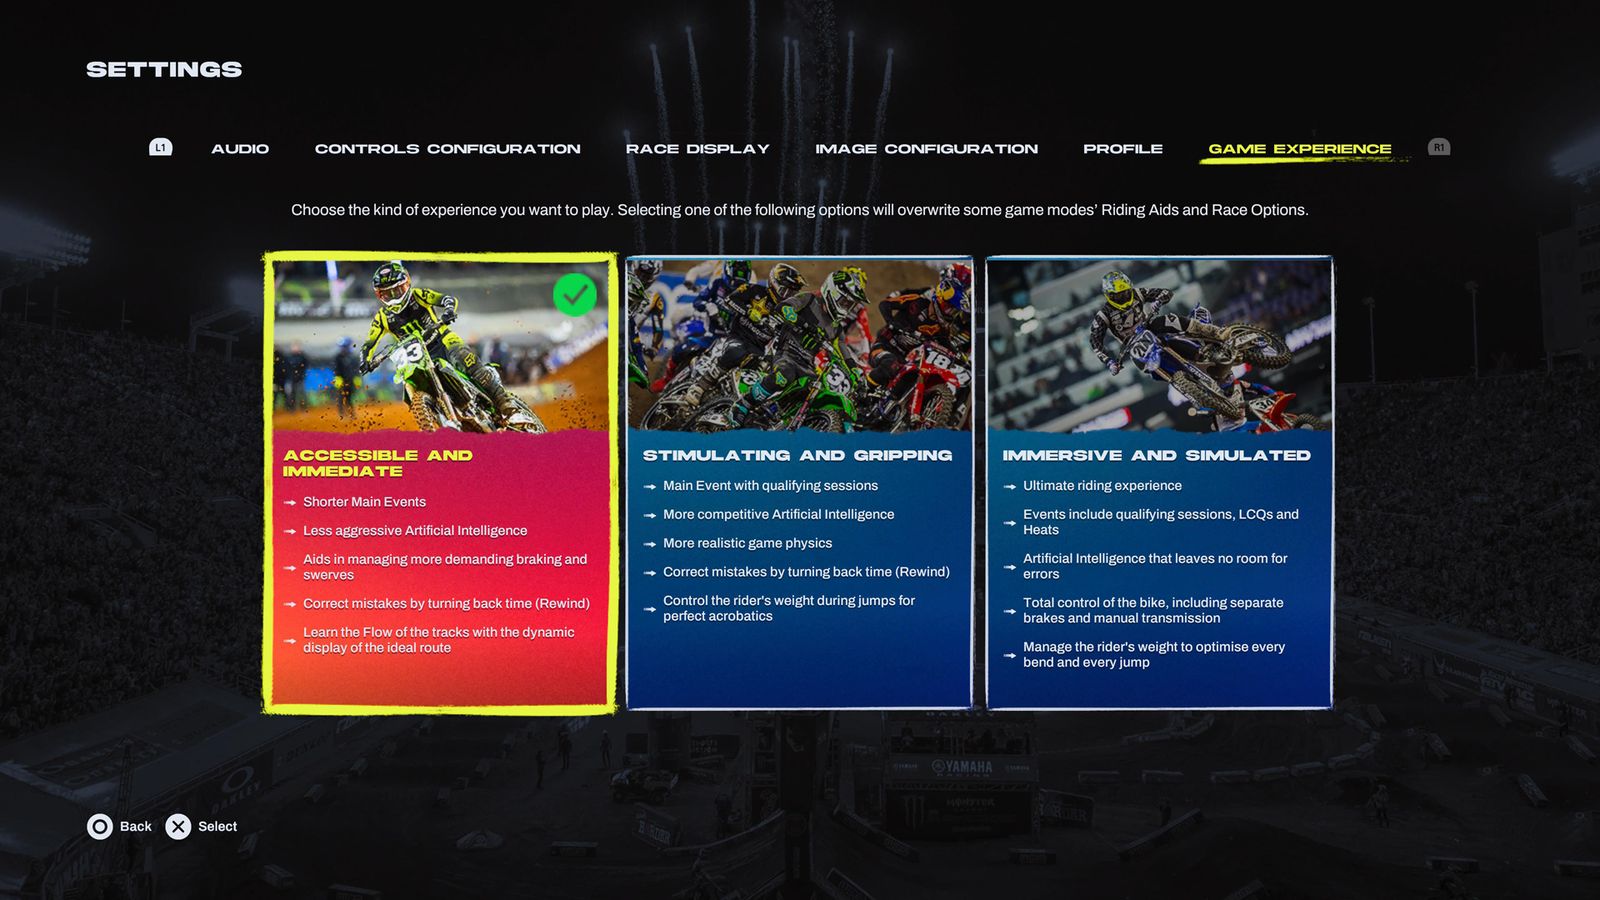 Monster Energy Supercross 6 beginners guide game experience